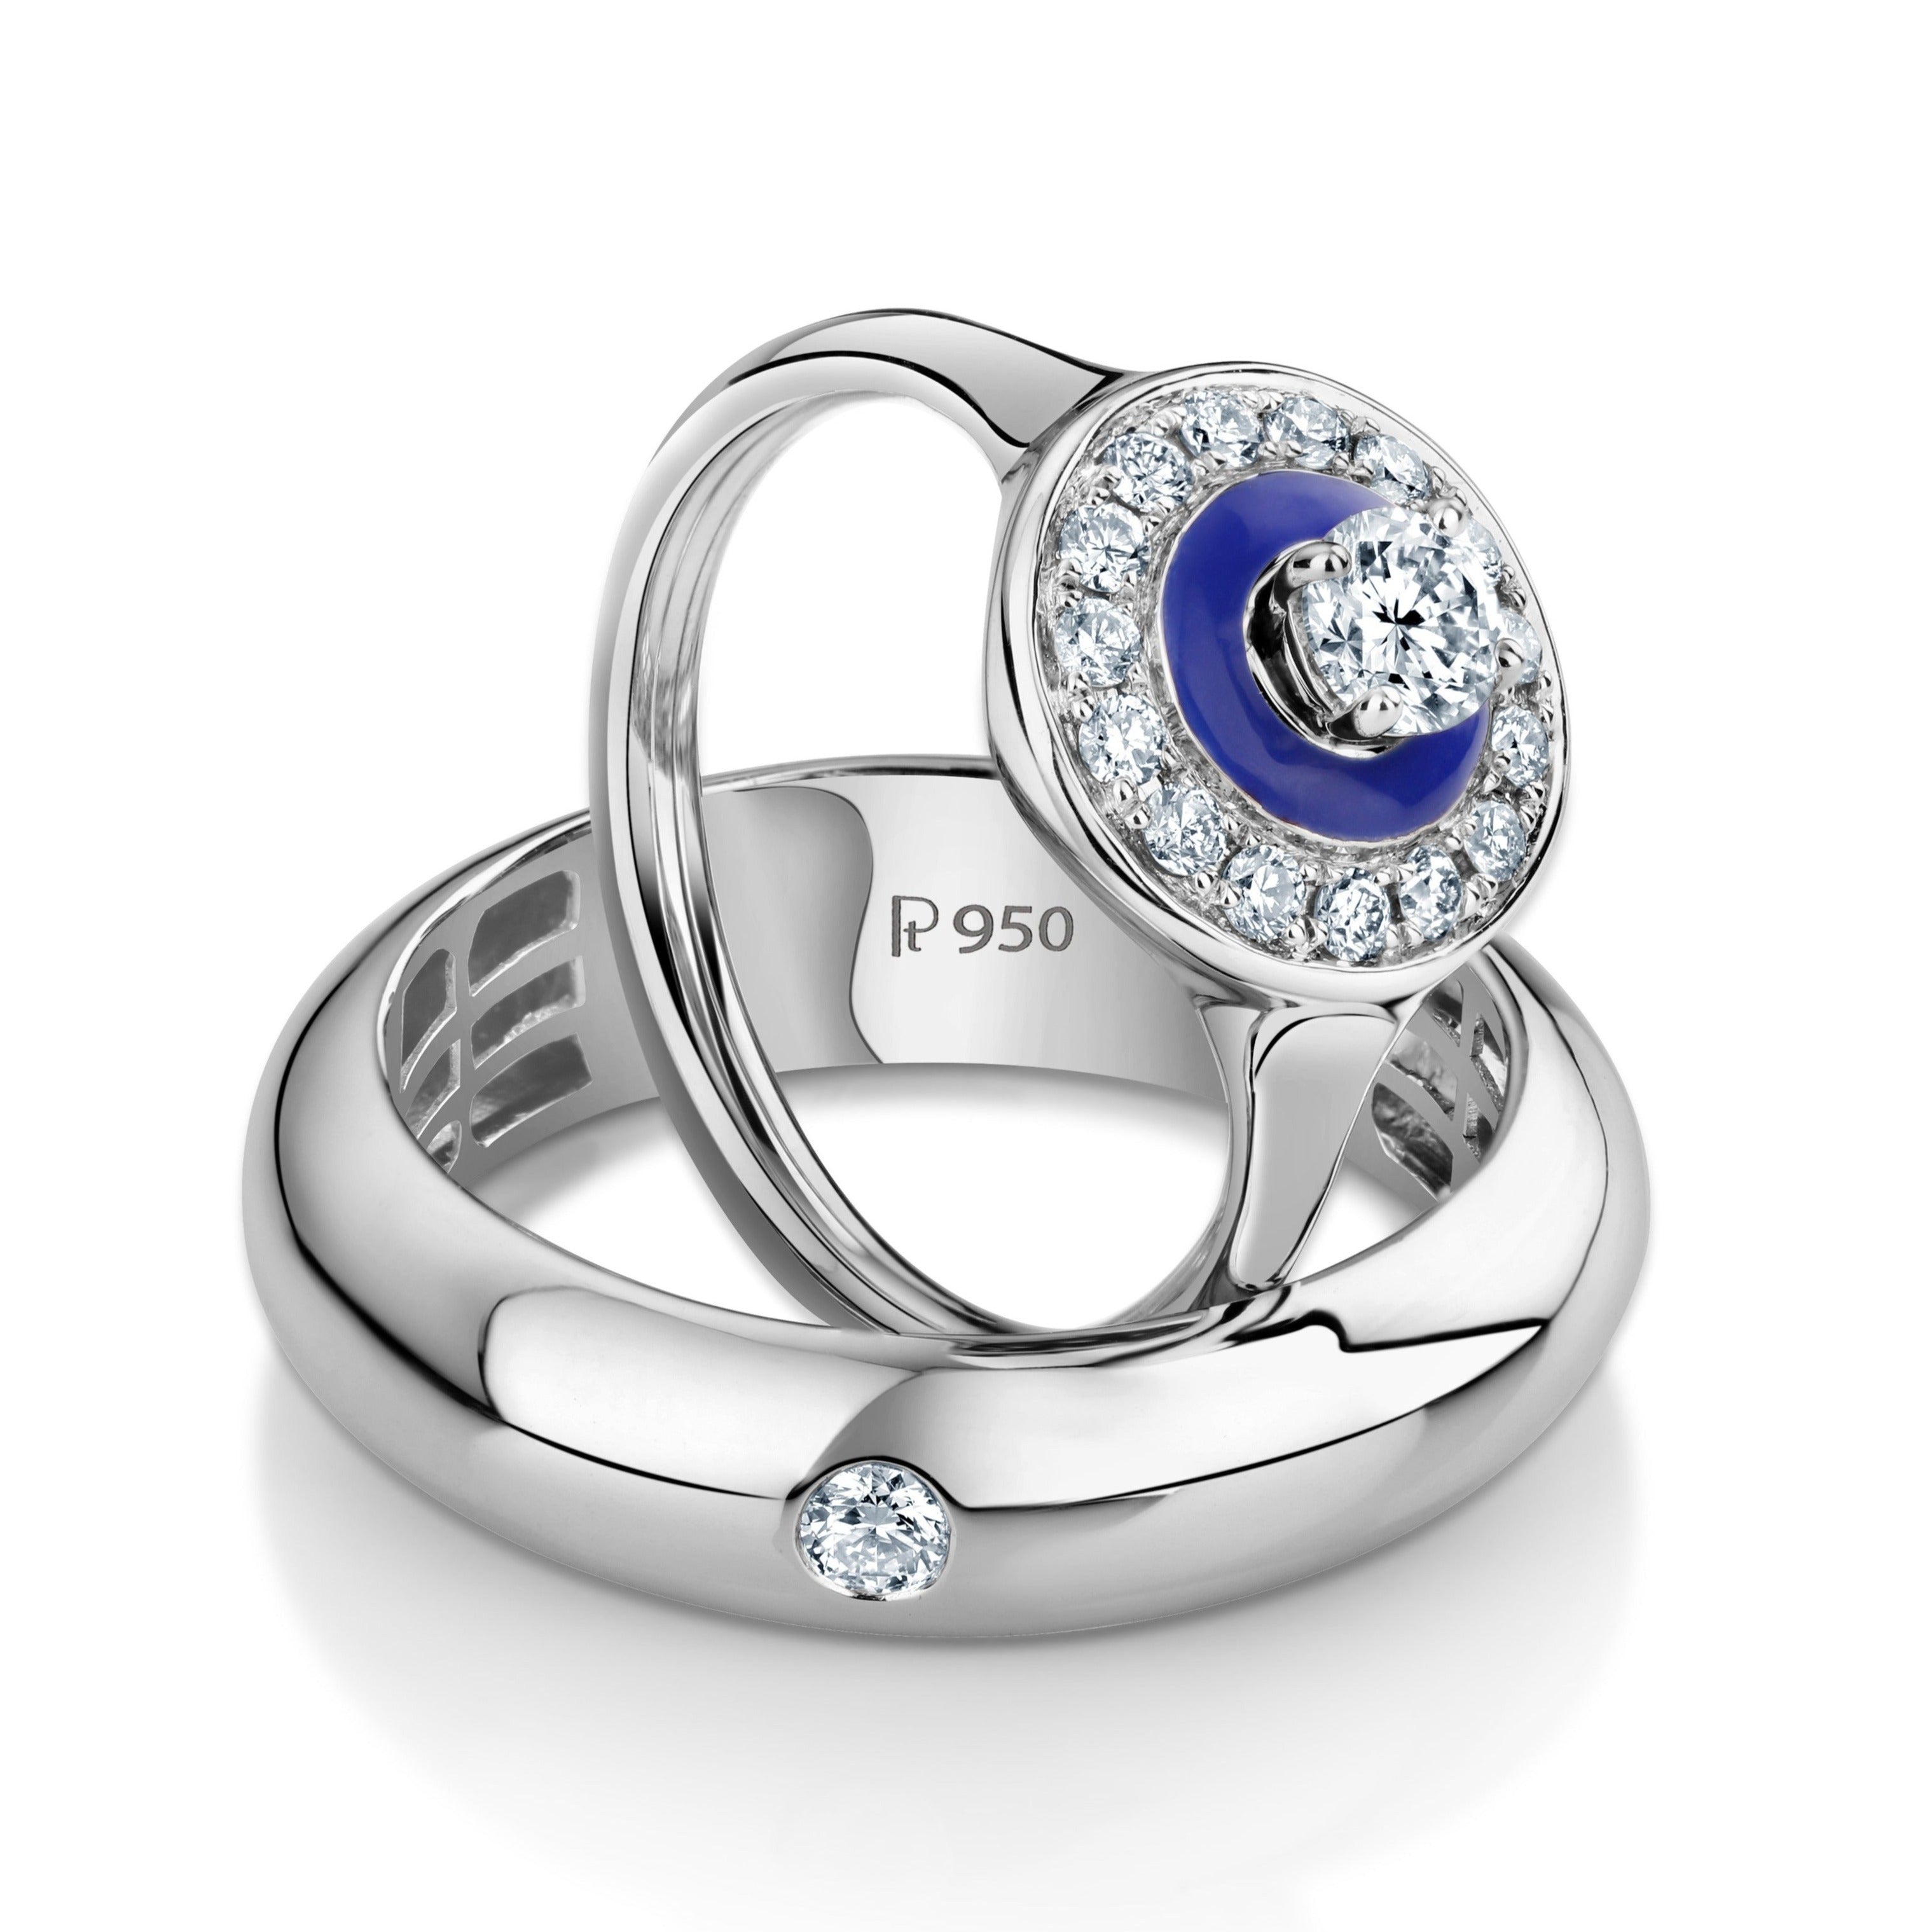 Designer Platinum Love Bands with Diamonds - Blue Enamel in Women's ring JL PT 991